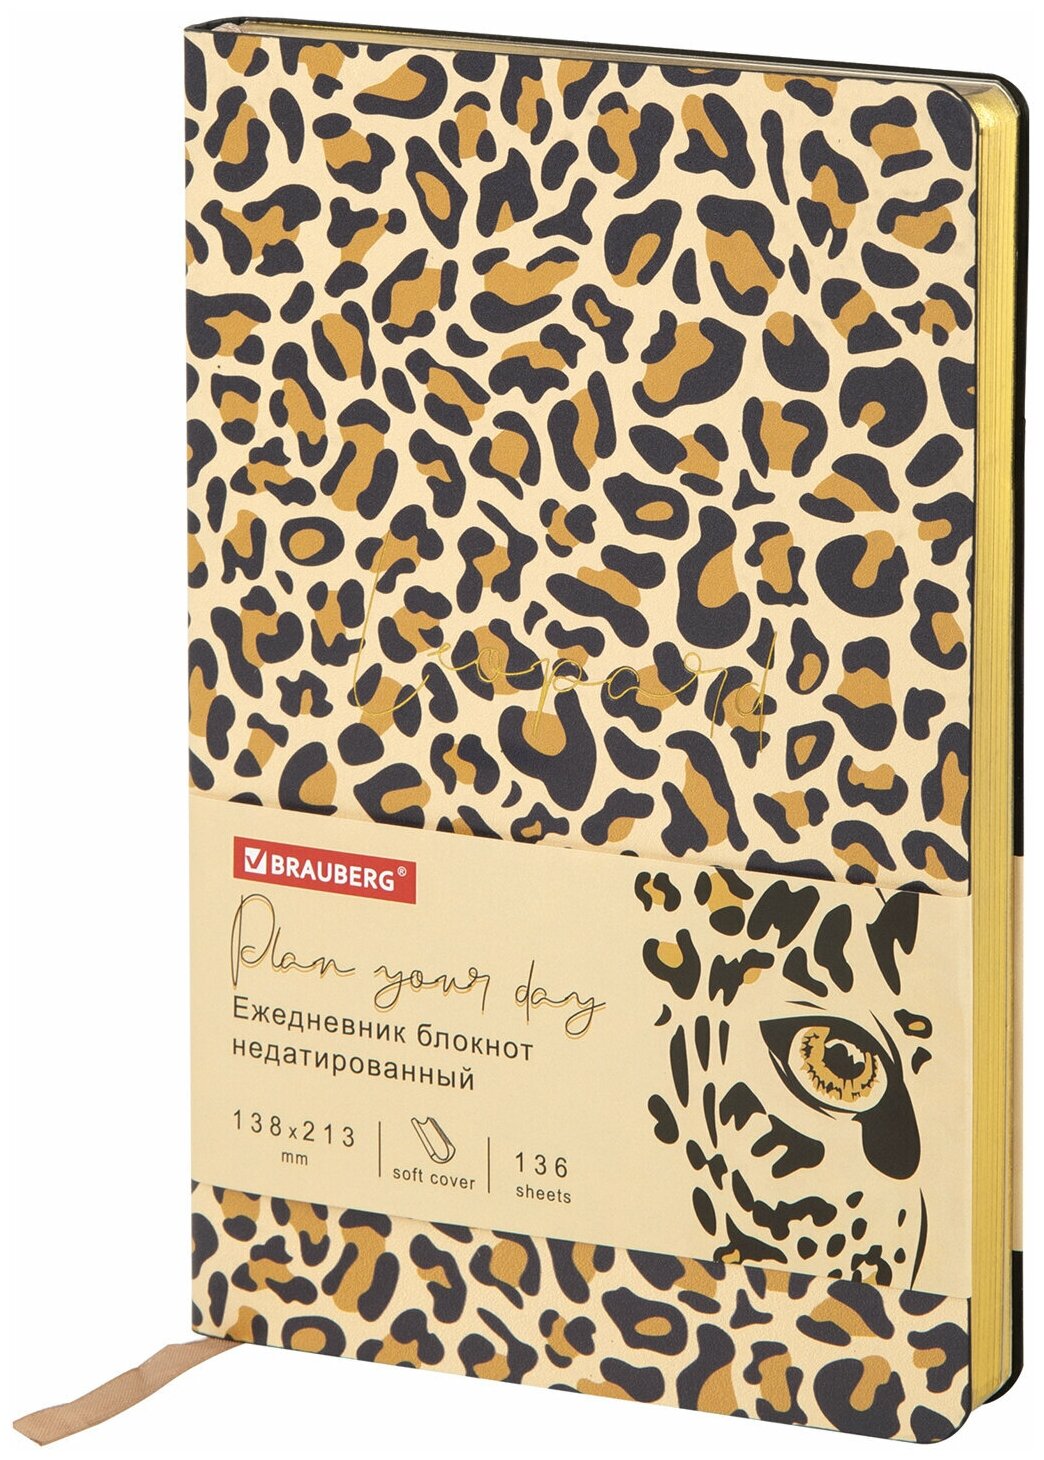   5 (138213 ), BRAUBERG VISTA,  , , 136 ., "Leopard", 112038